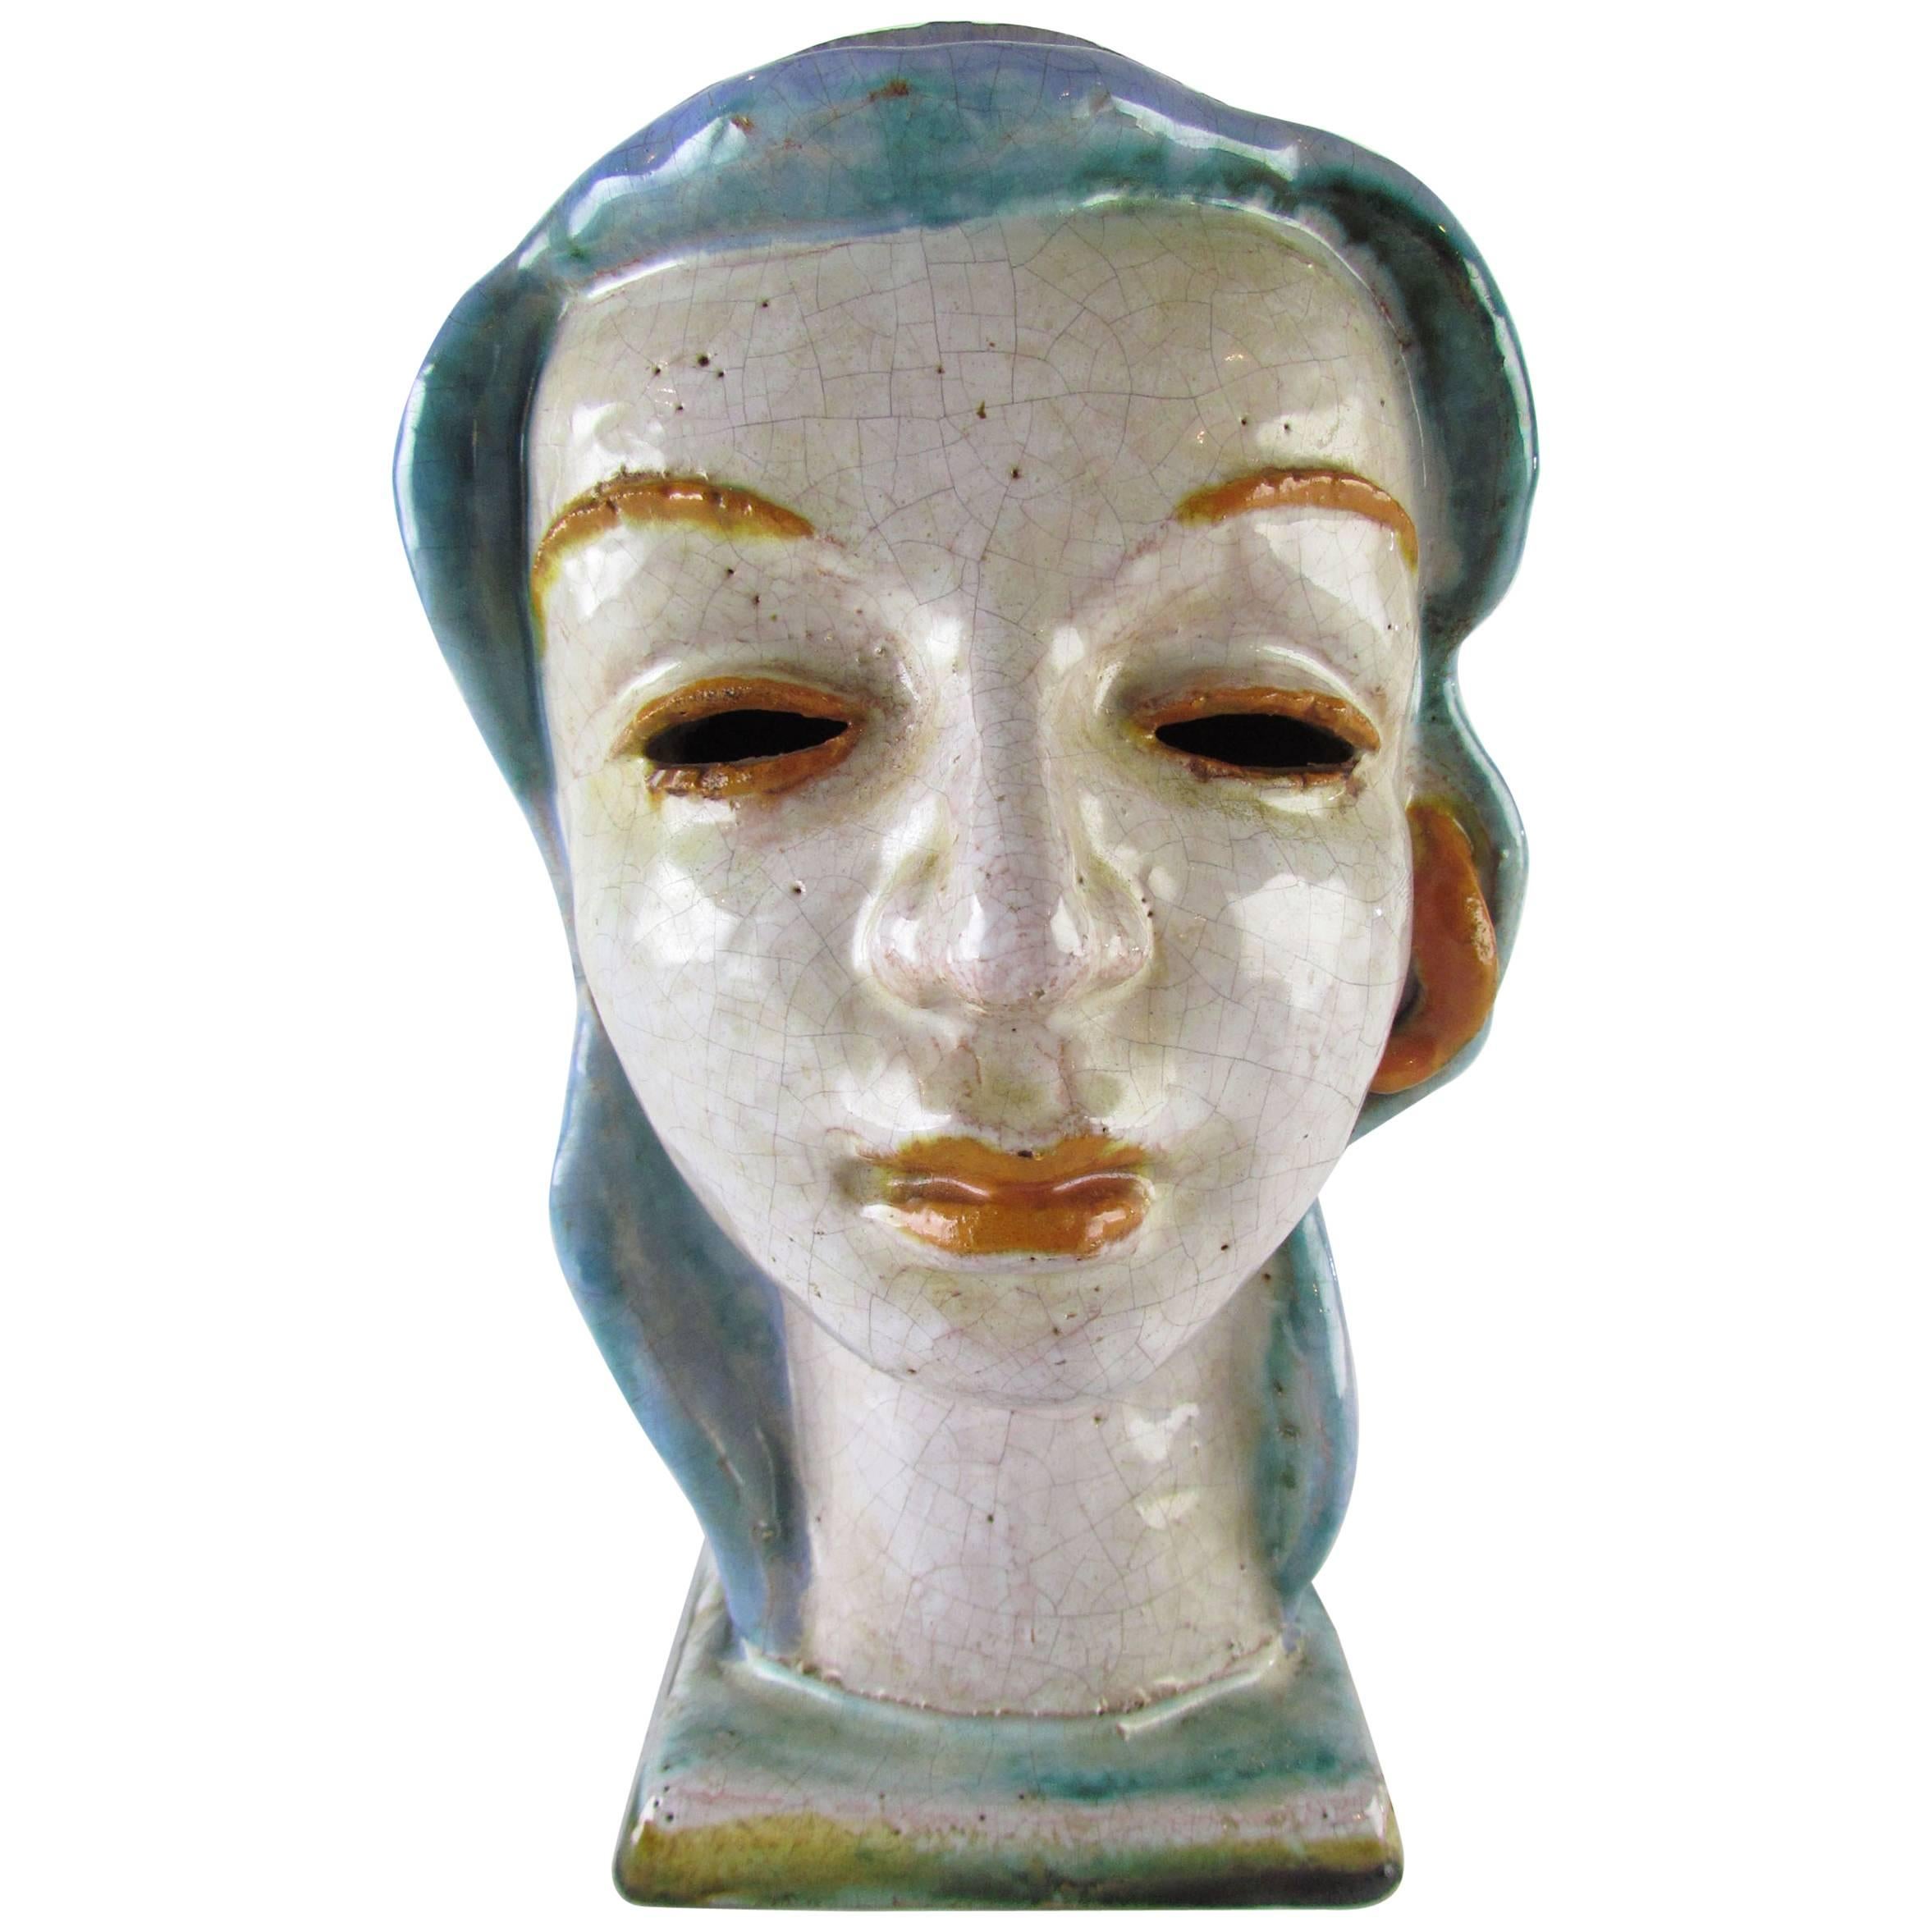 Head of a Woman Sculpture, Wiener Werkstatte Style, Made in Austria, circa 1920s